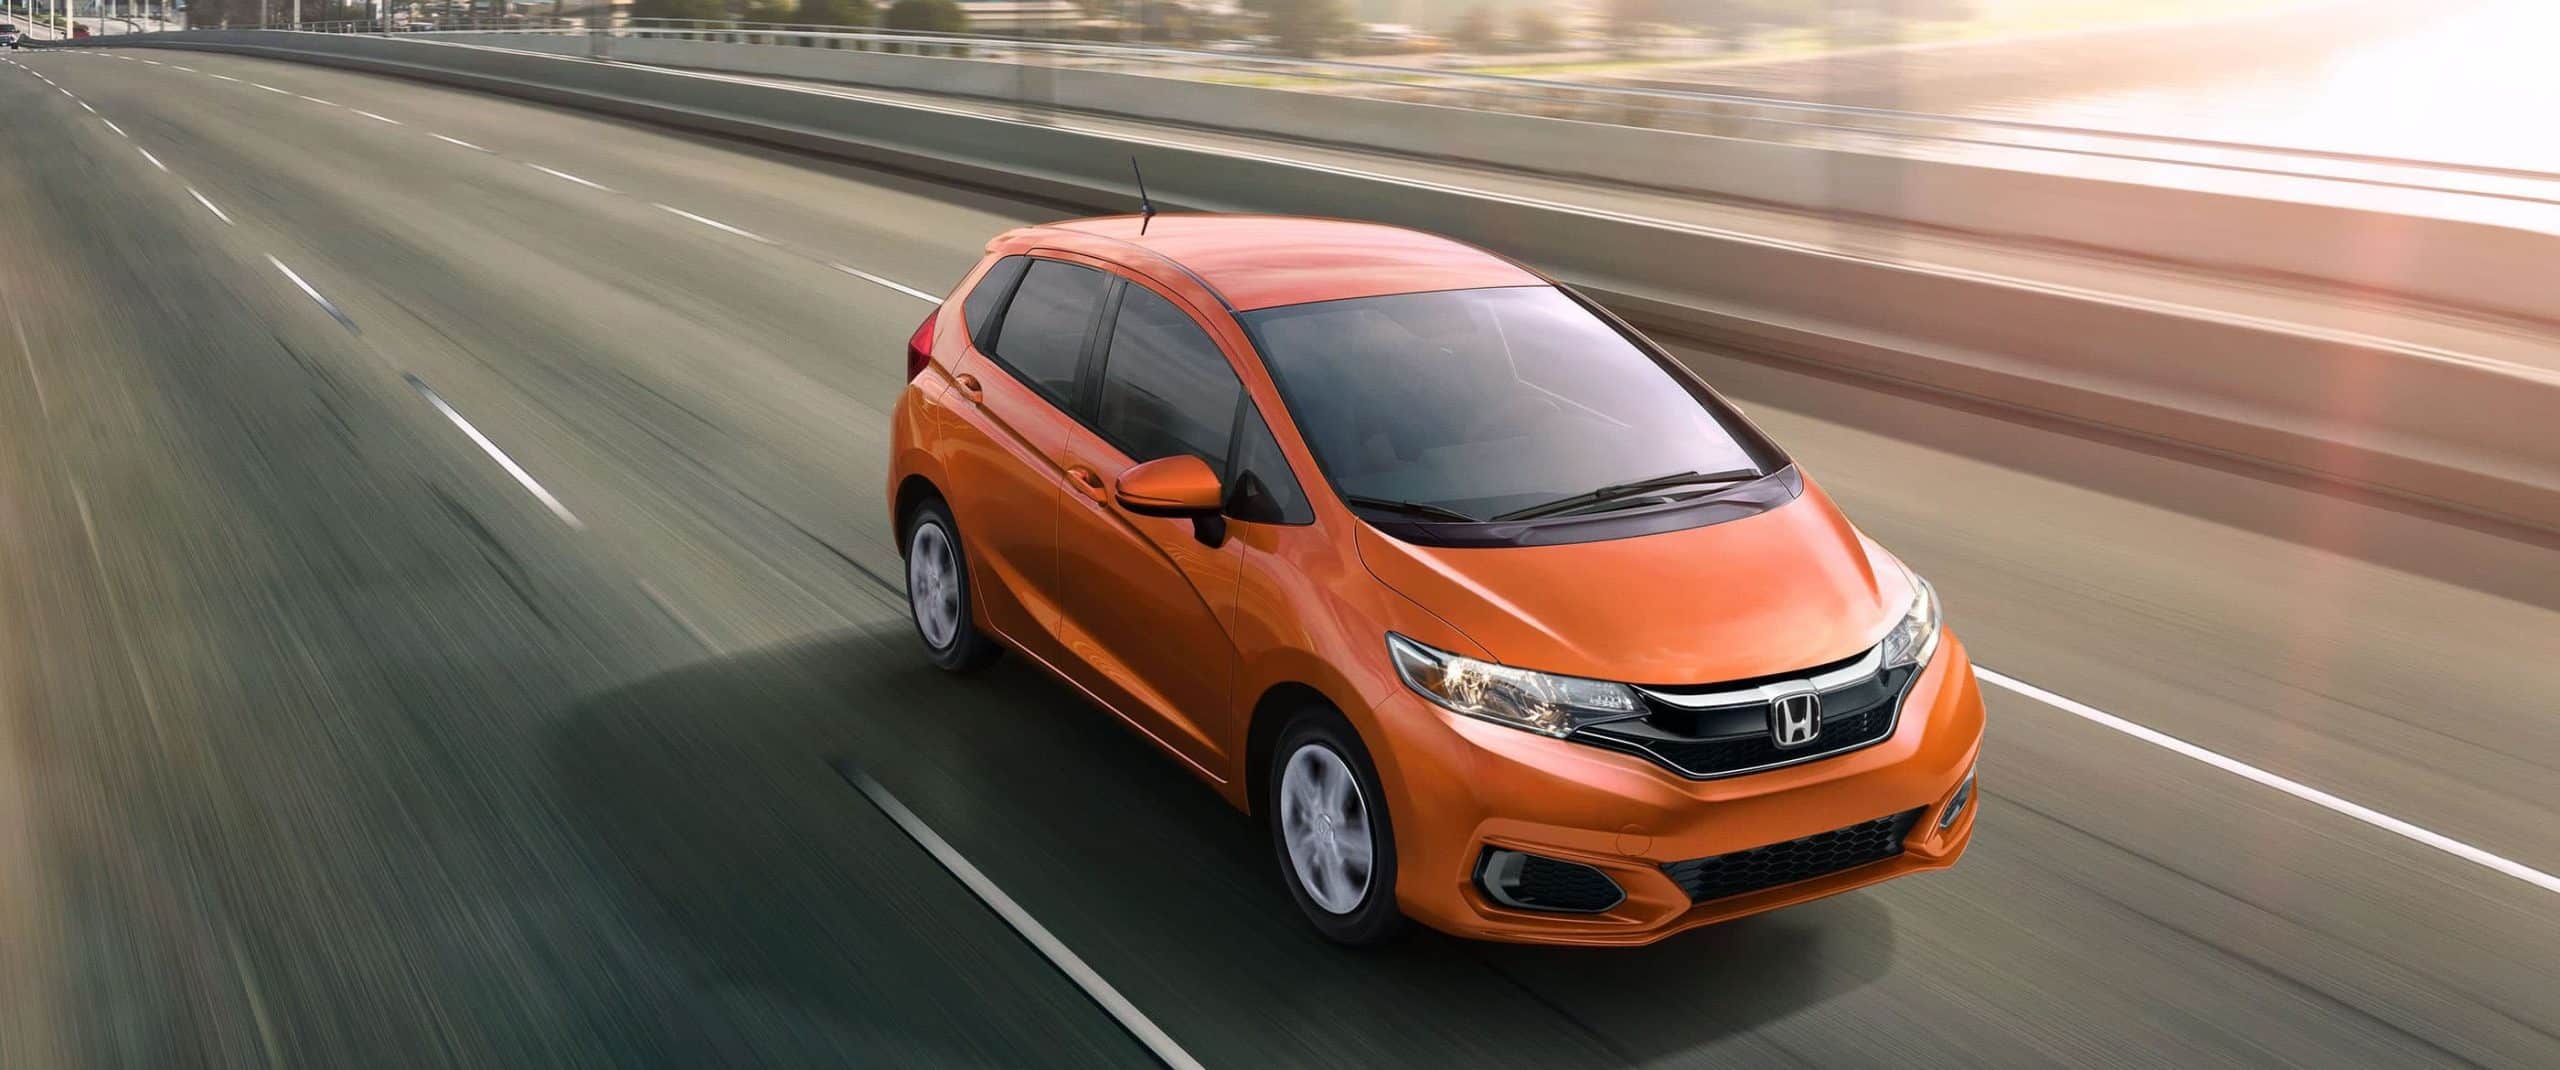 2018 Honda Fit orange color on fury bridge in speed blur background widescreen hd wallpaper